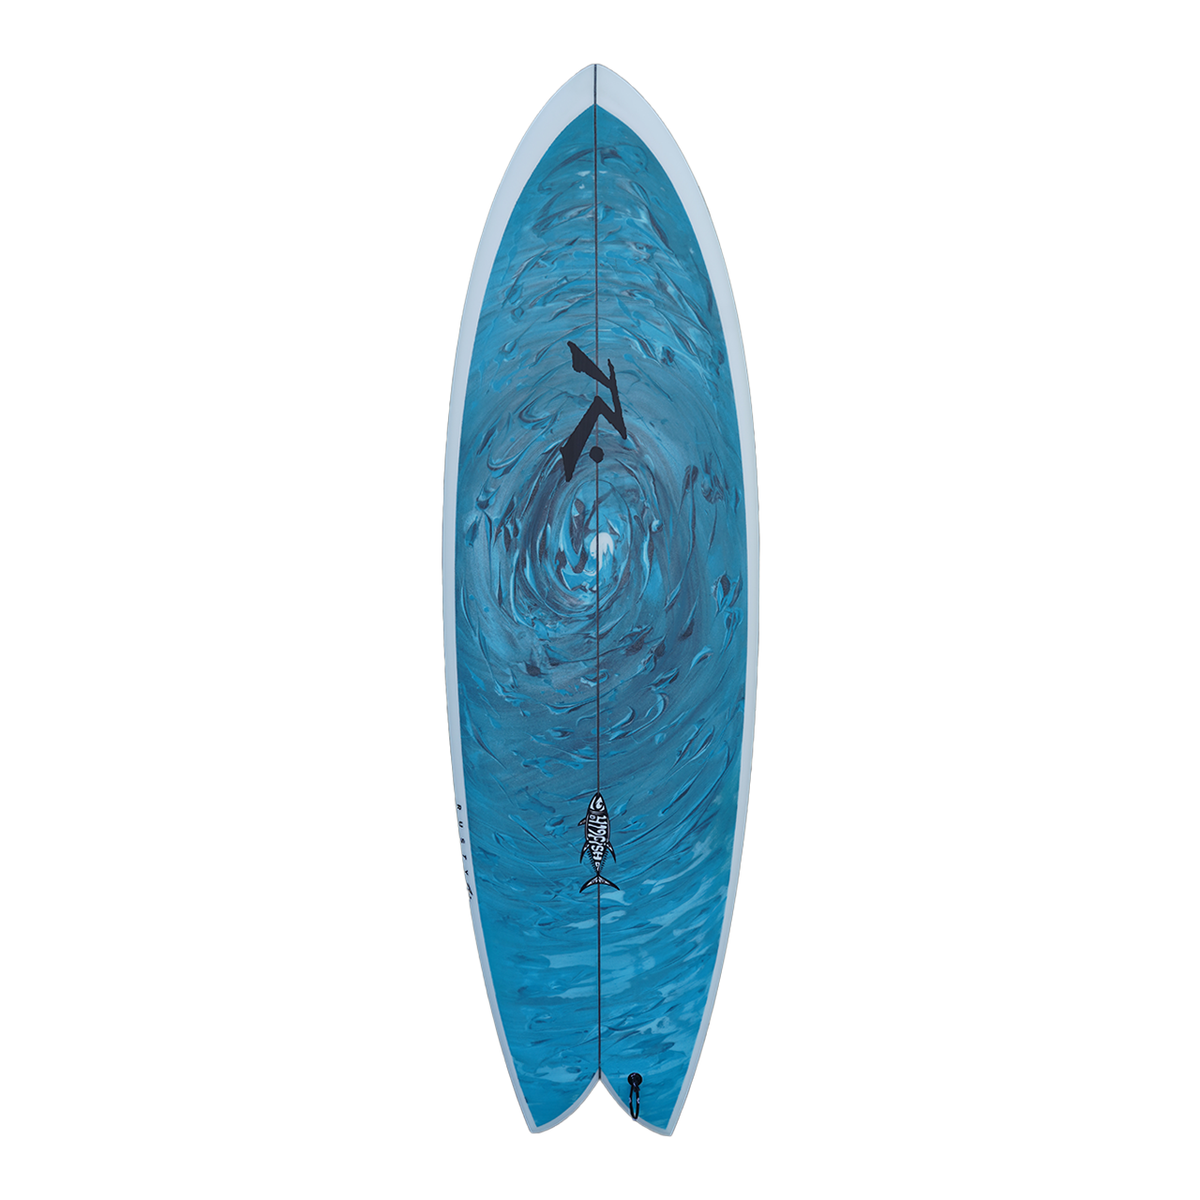 419fish - Alternative - Rusty Surfboards - Top View - Blue Swirl